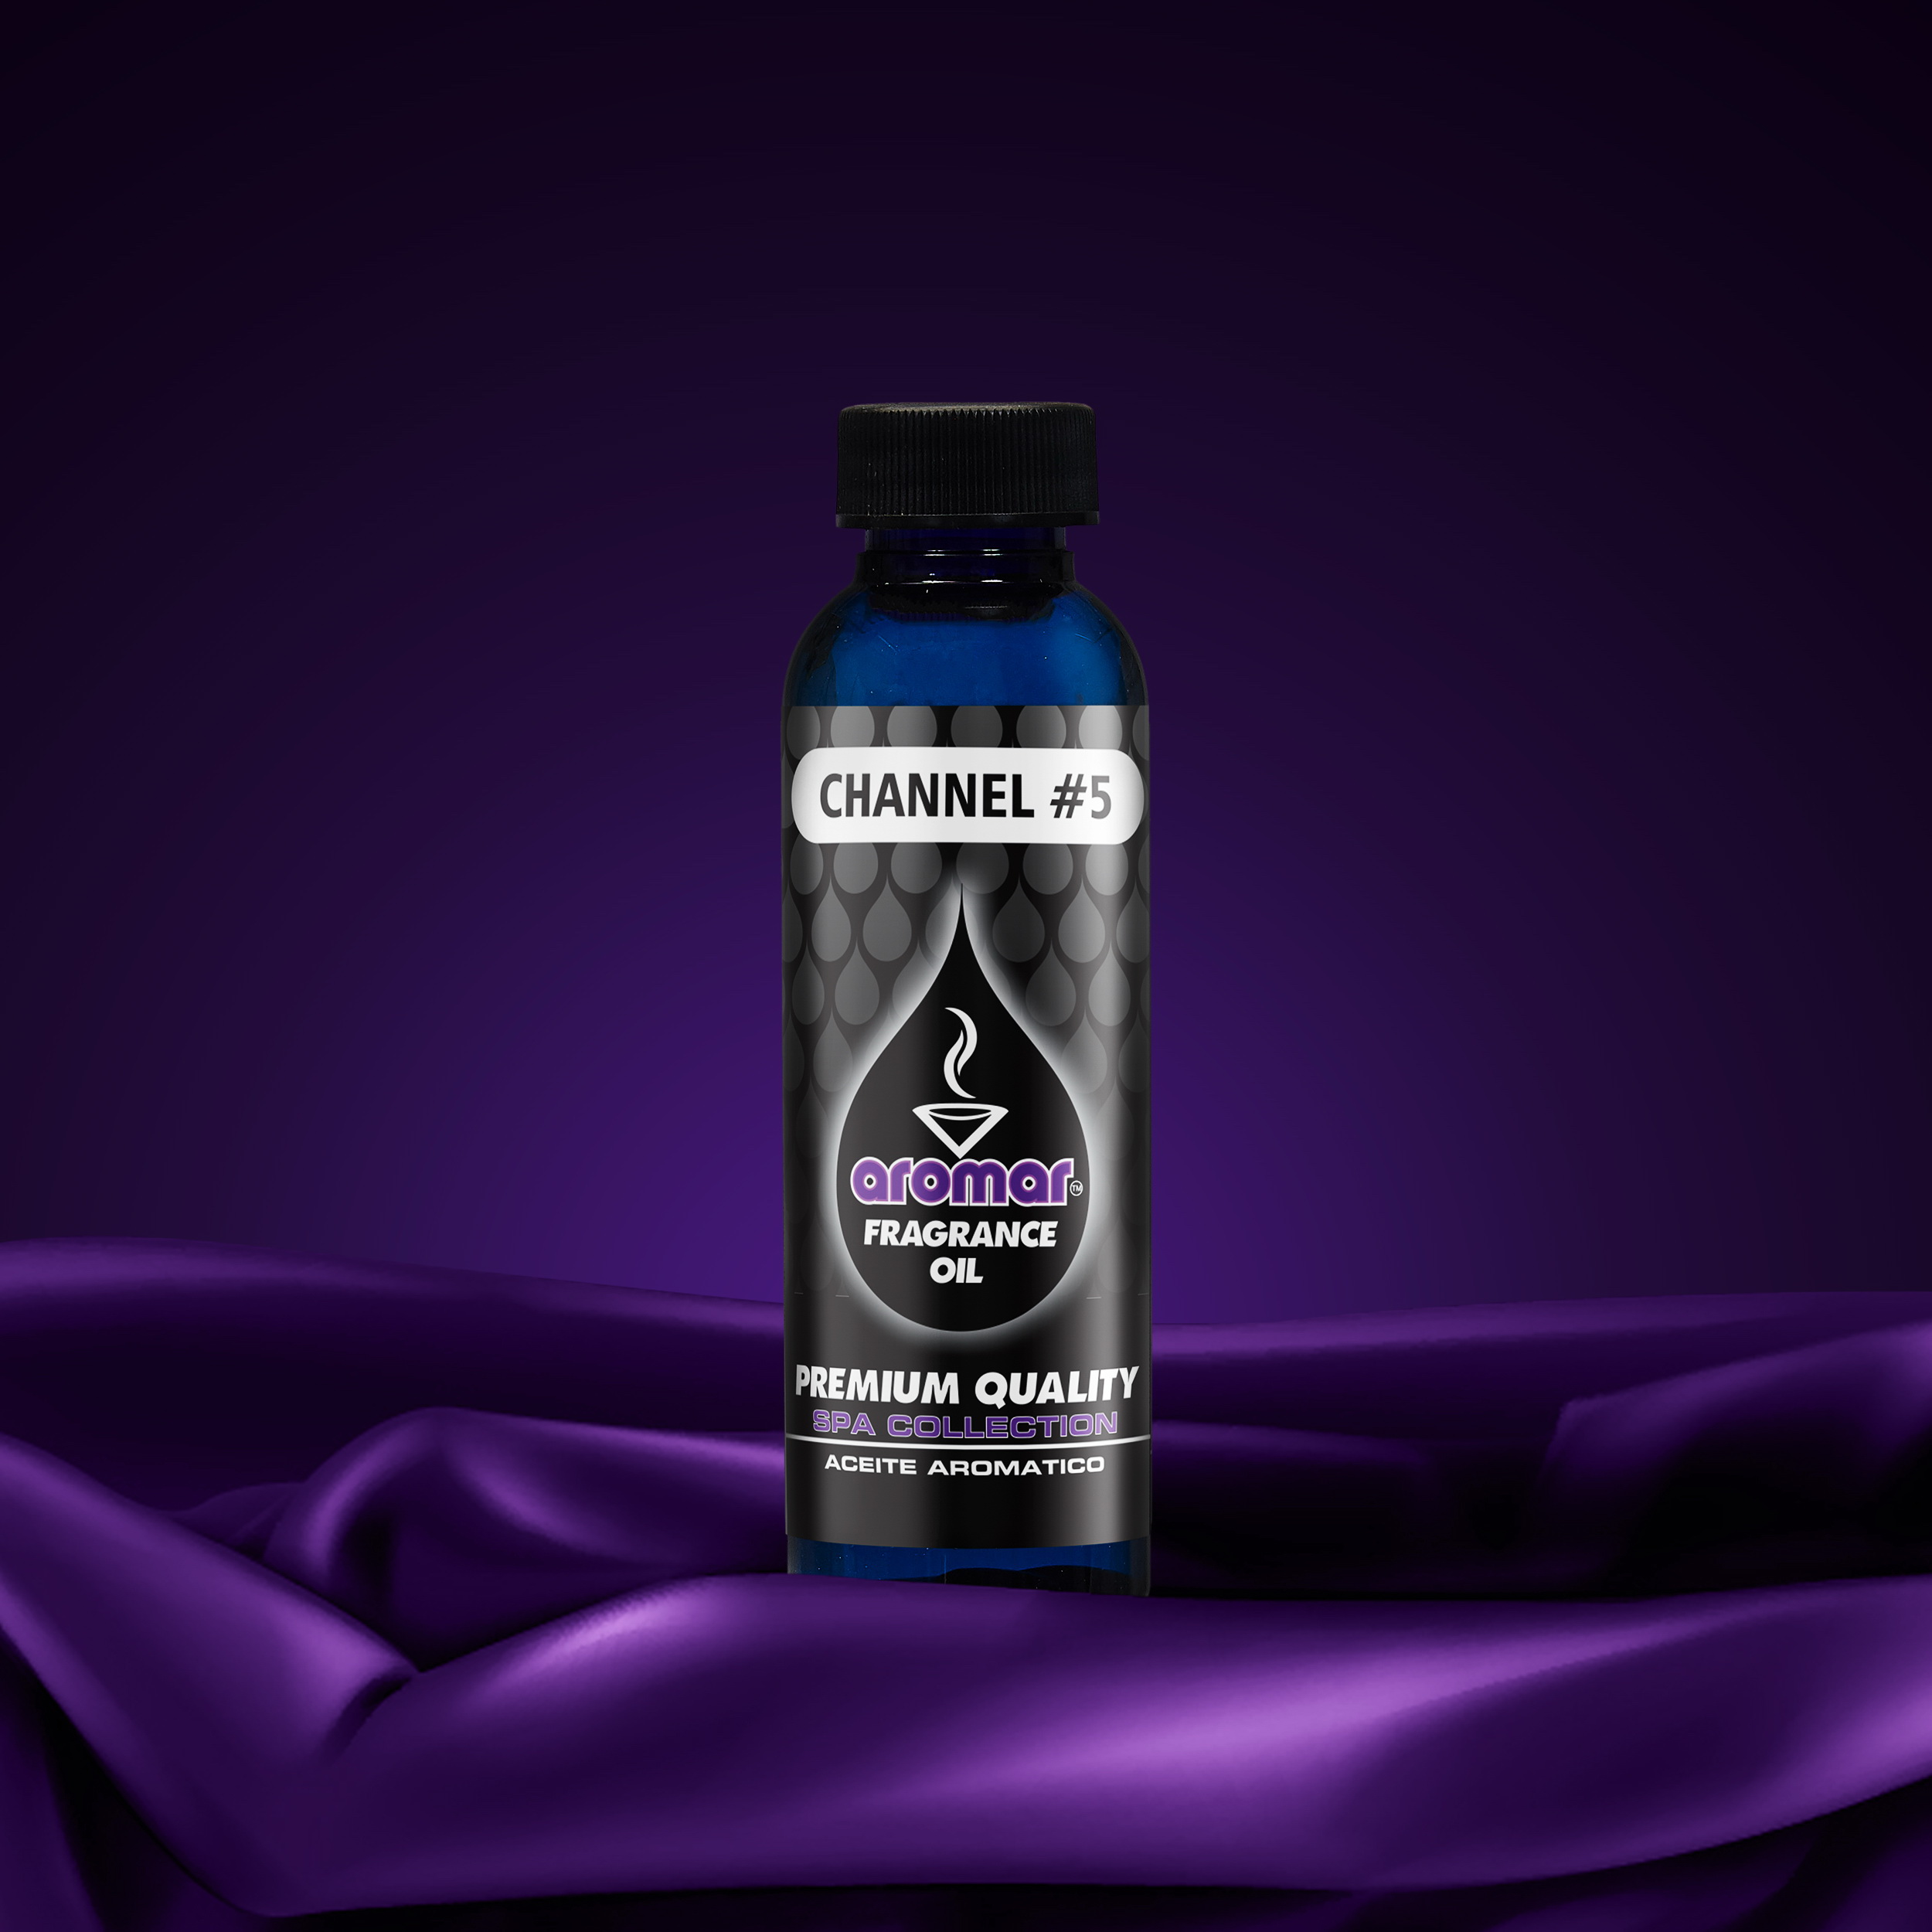 aromar 1002 Fragrance Oil, 2 oz, Channel #5, Clear